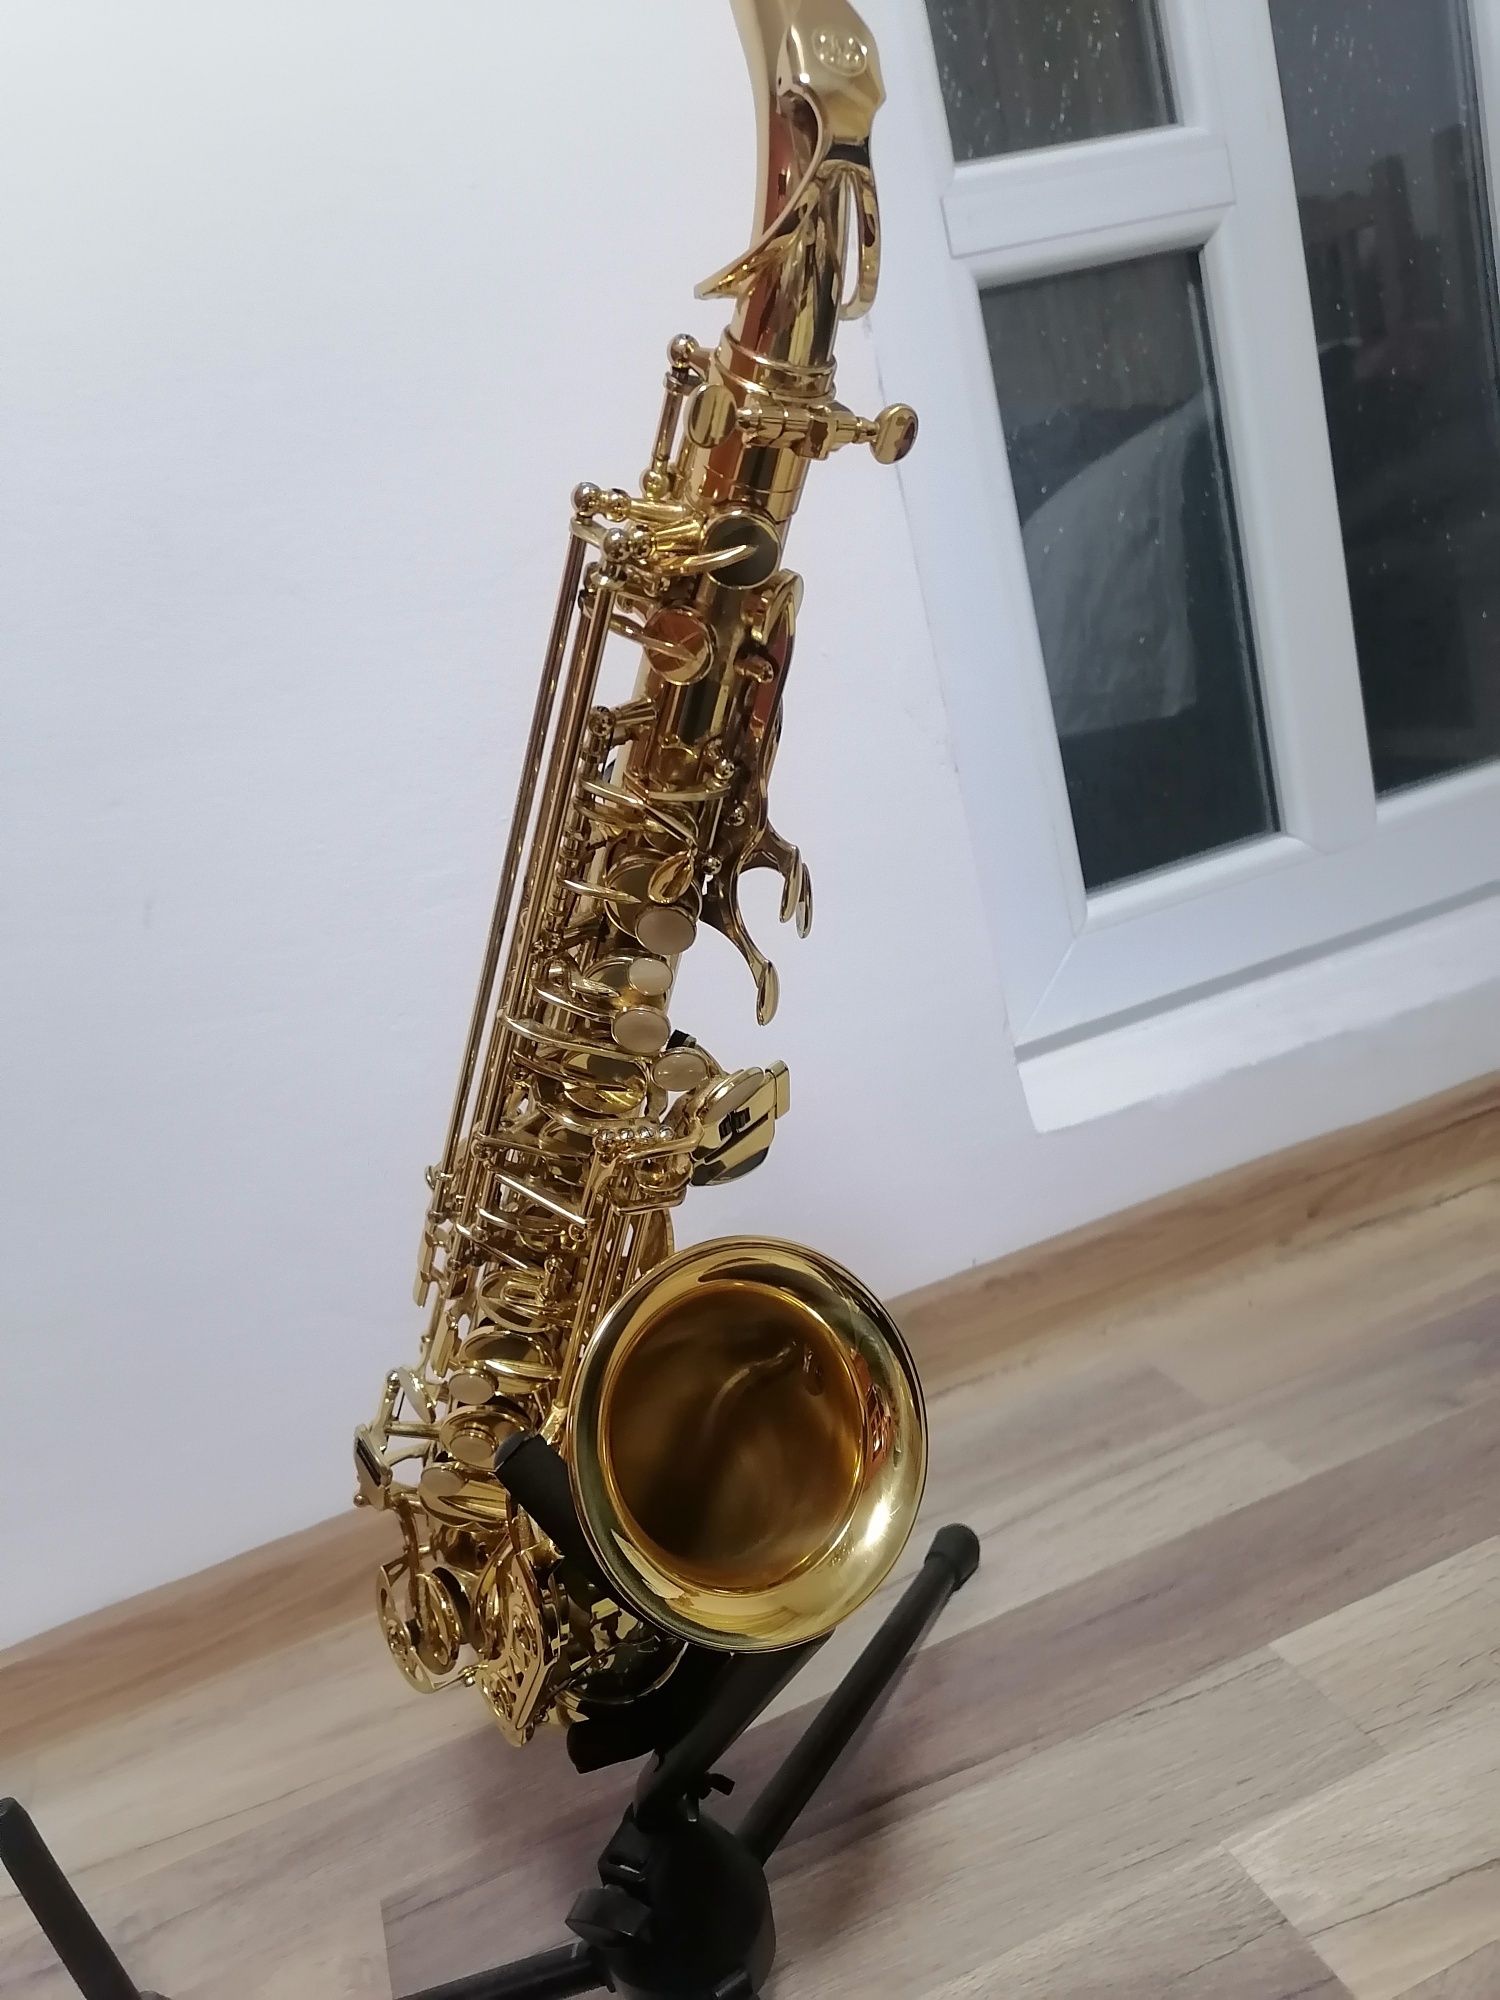 Vand saxofon alto Buffet Crampon S 100